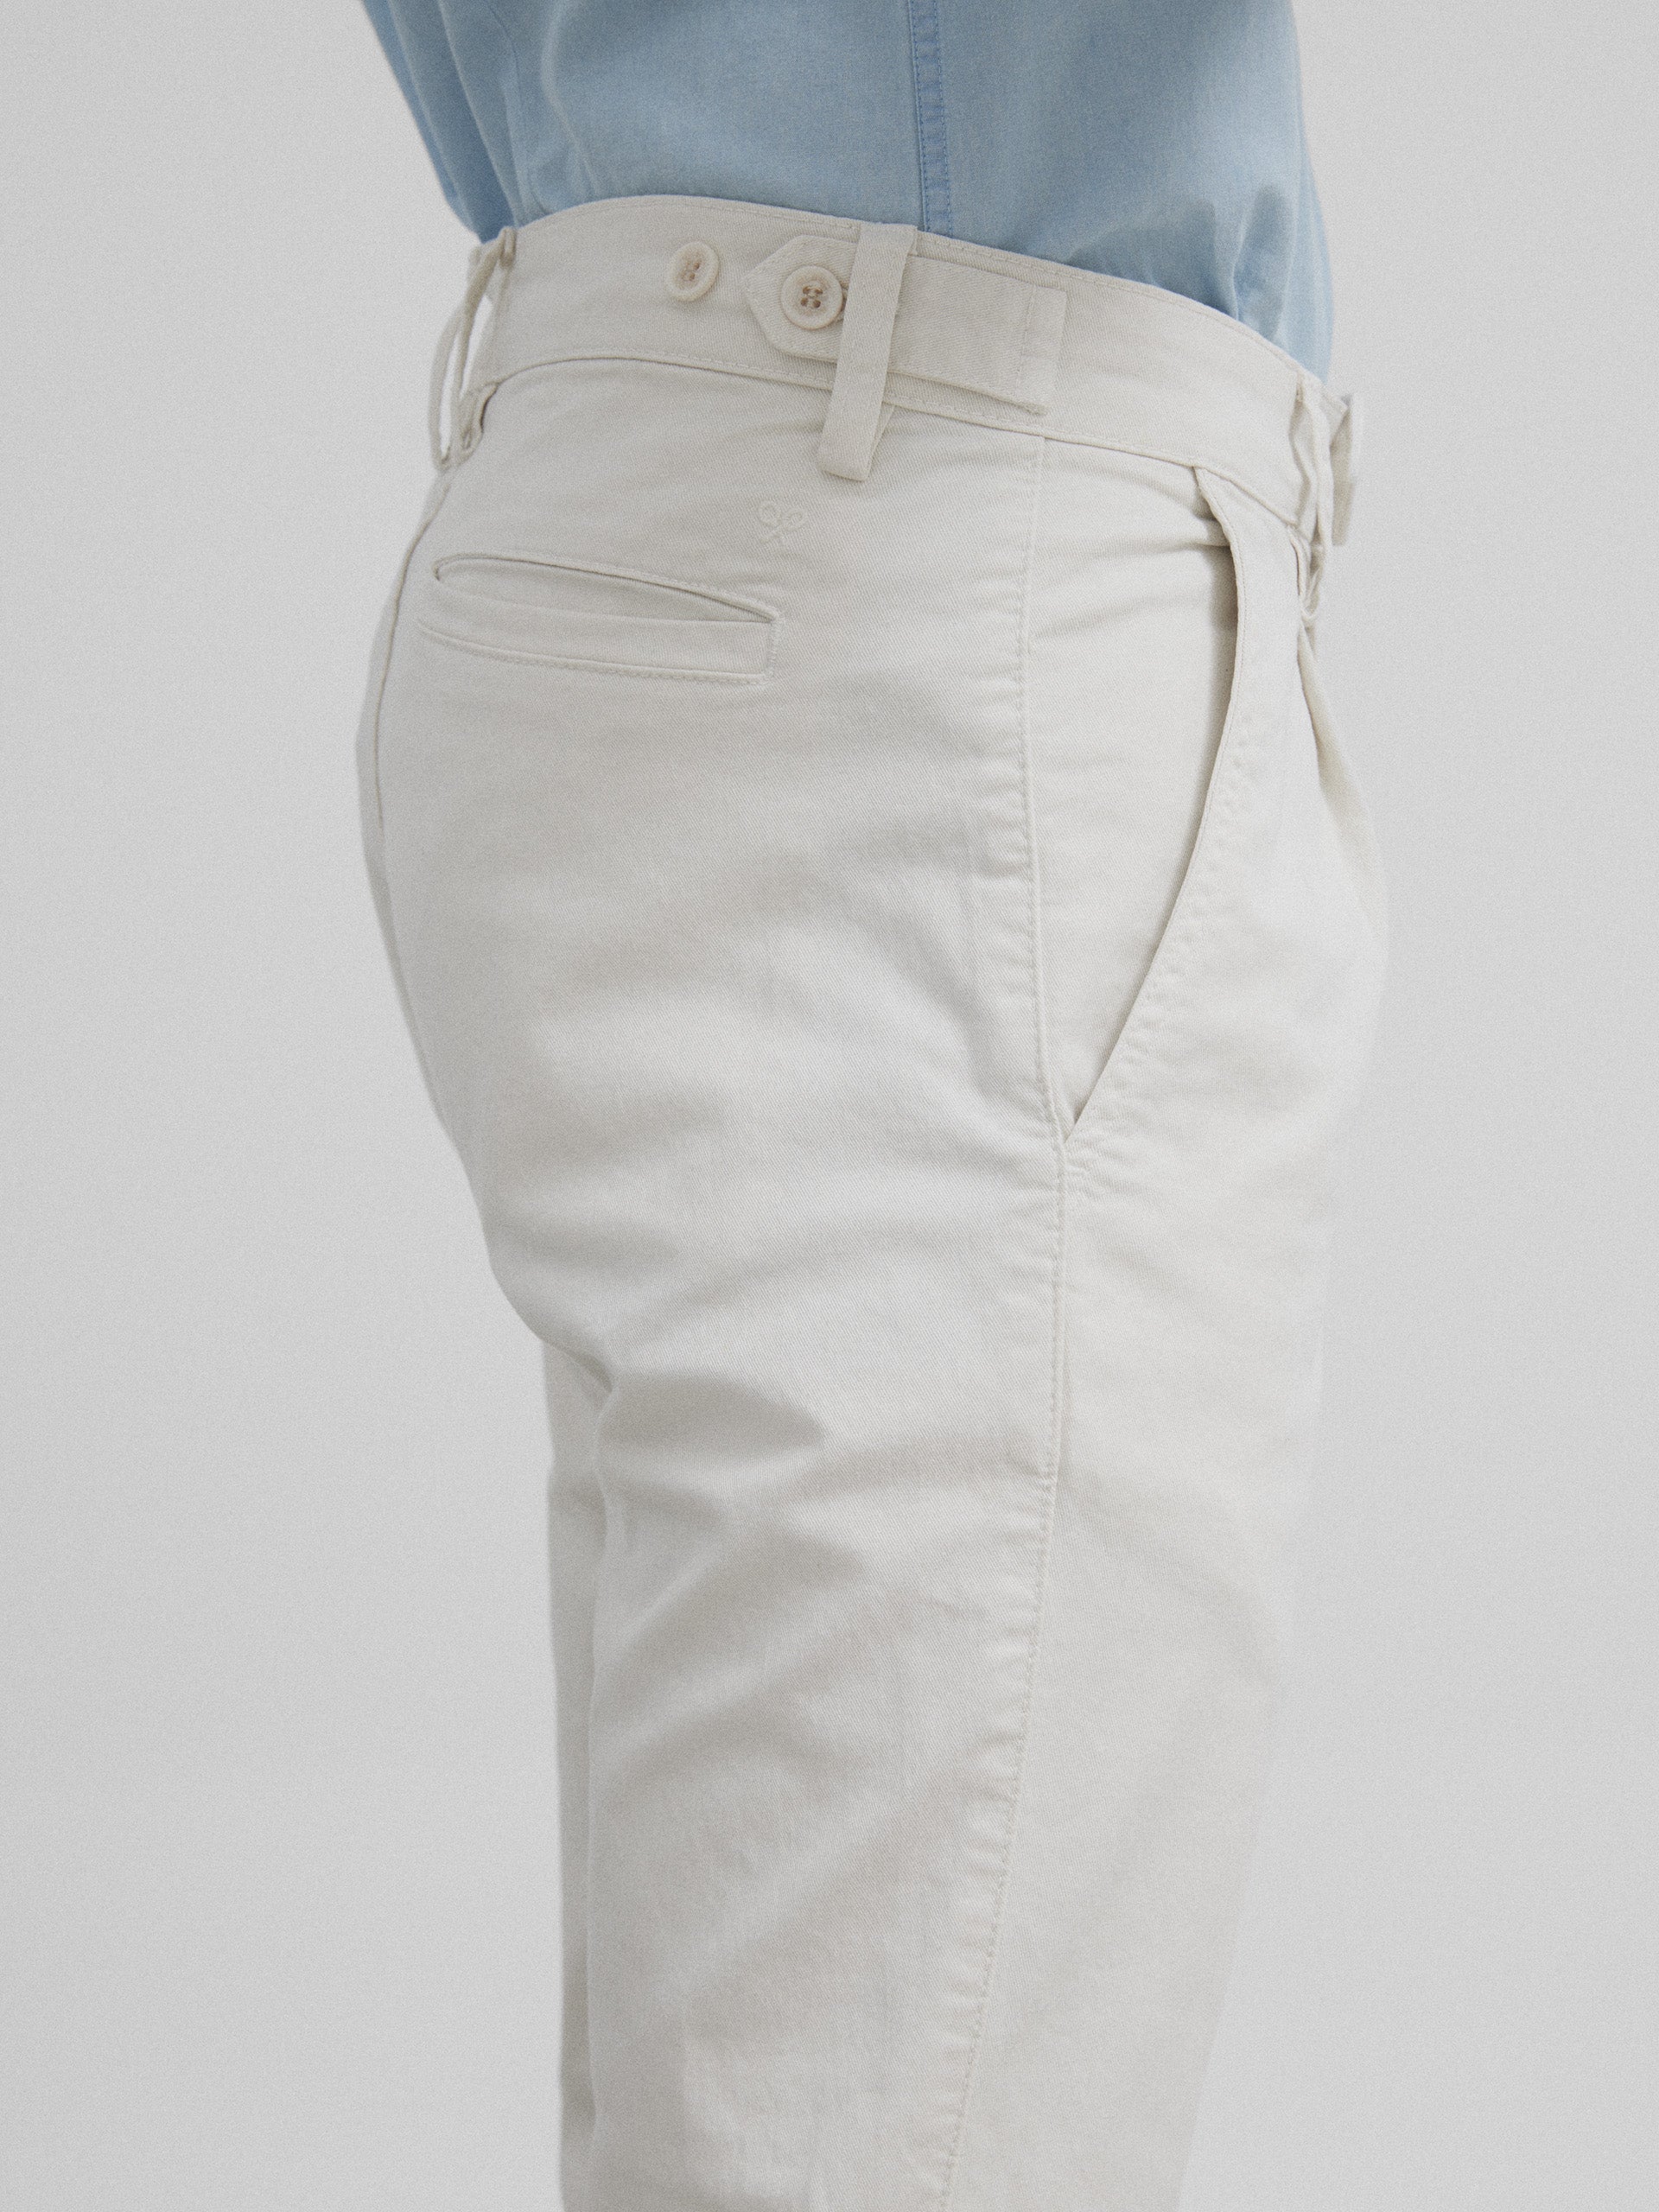 Light beige pleated chino sport pants